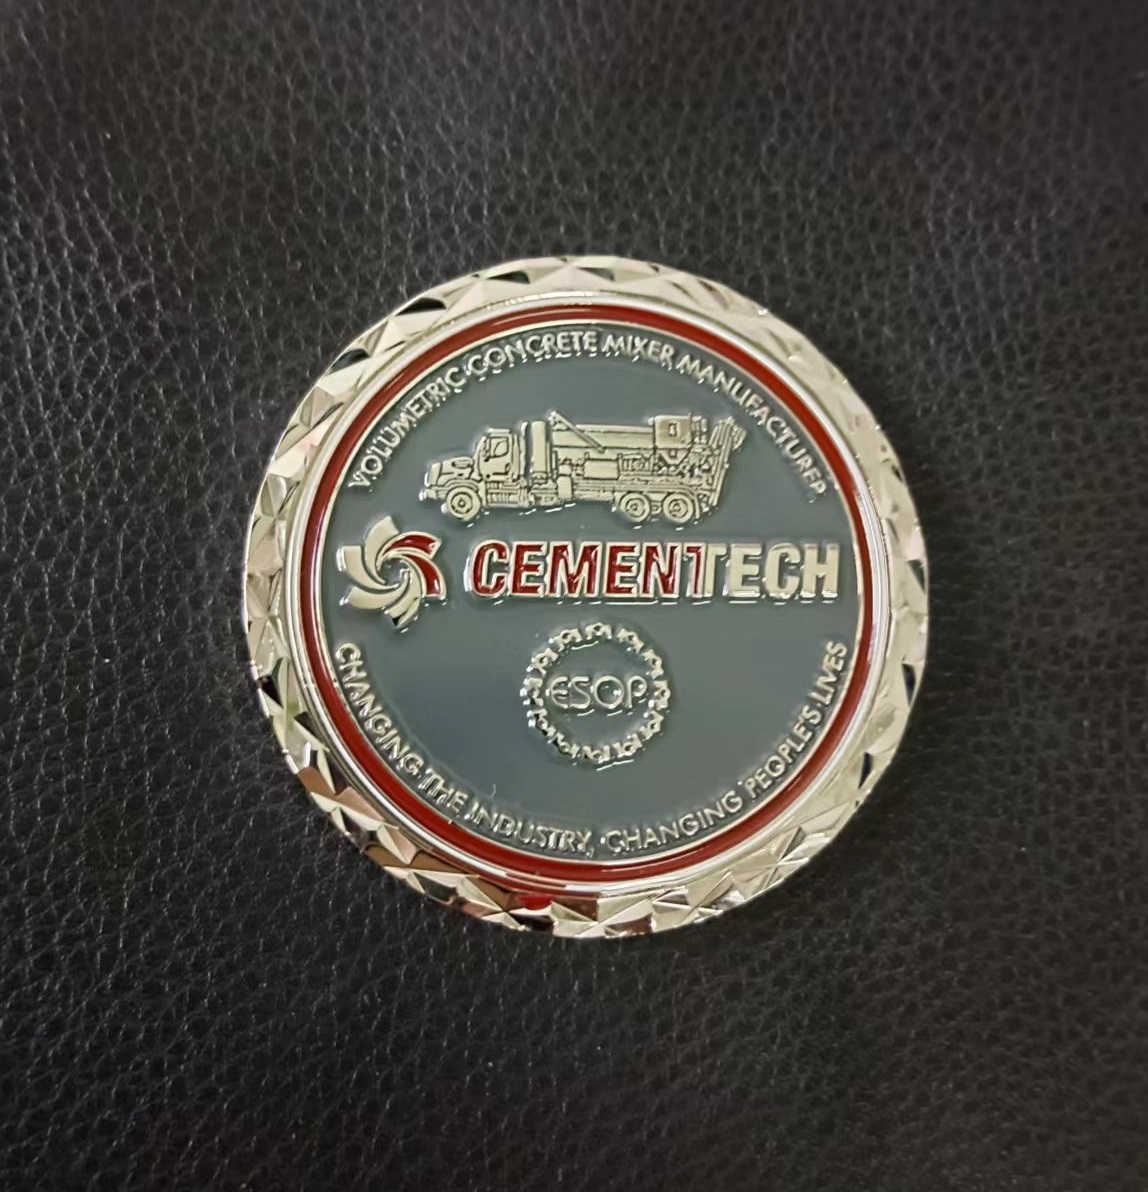 Cementech Challenge Coin